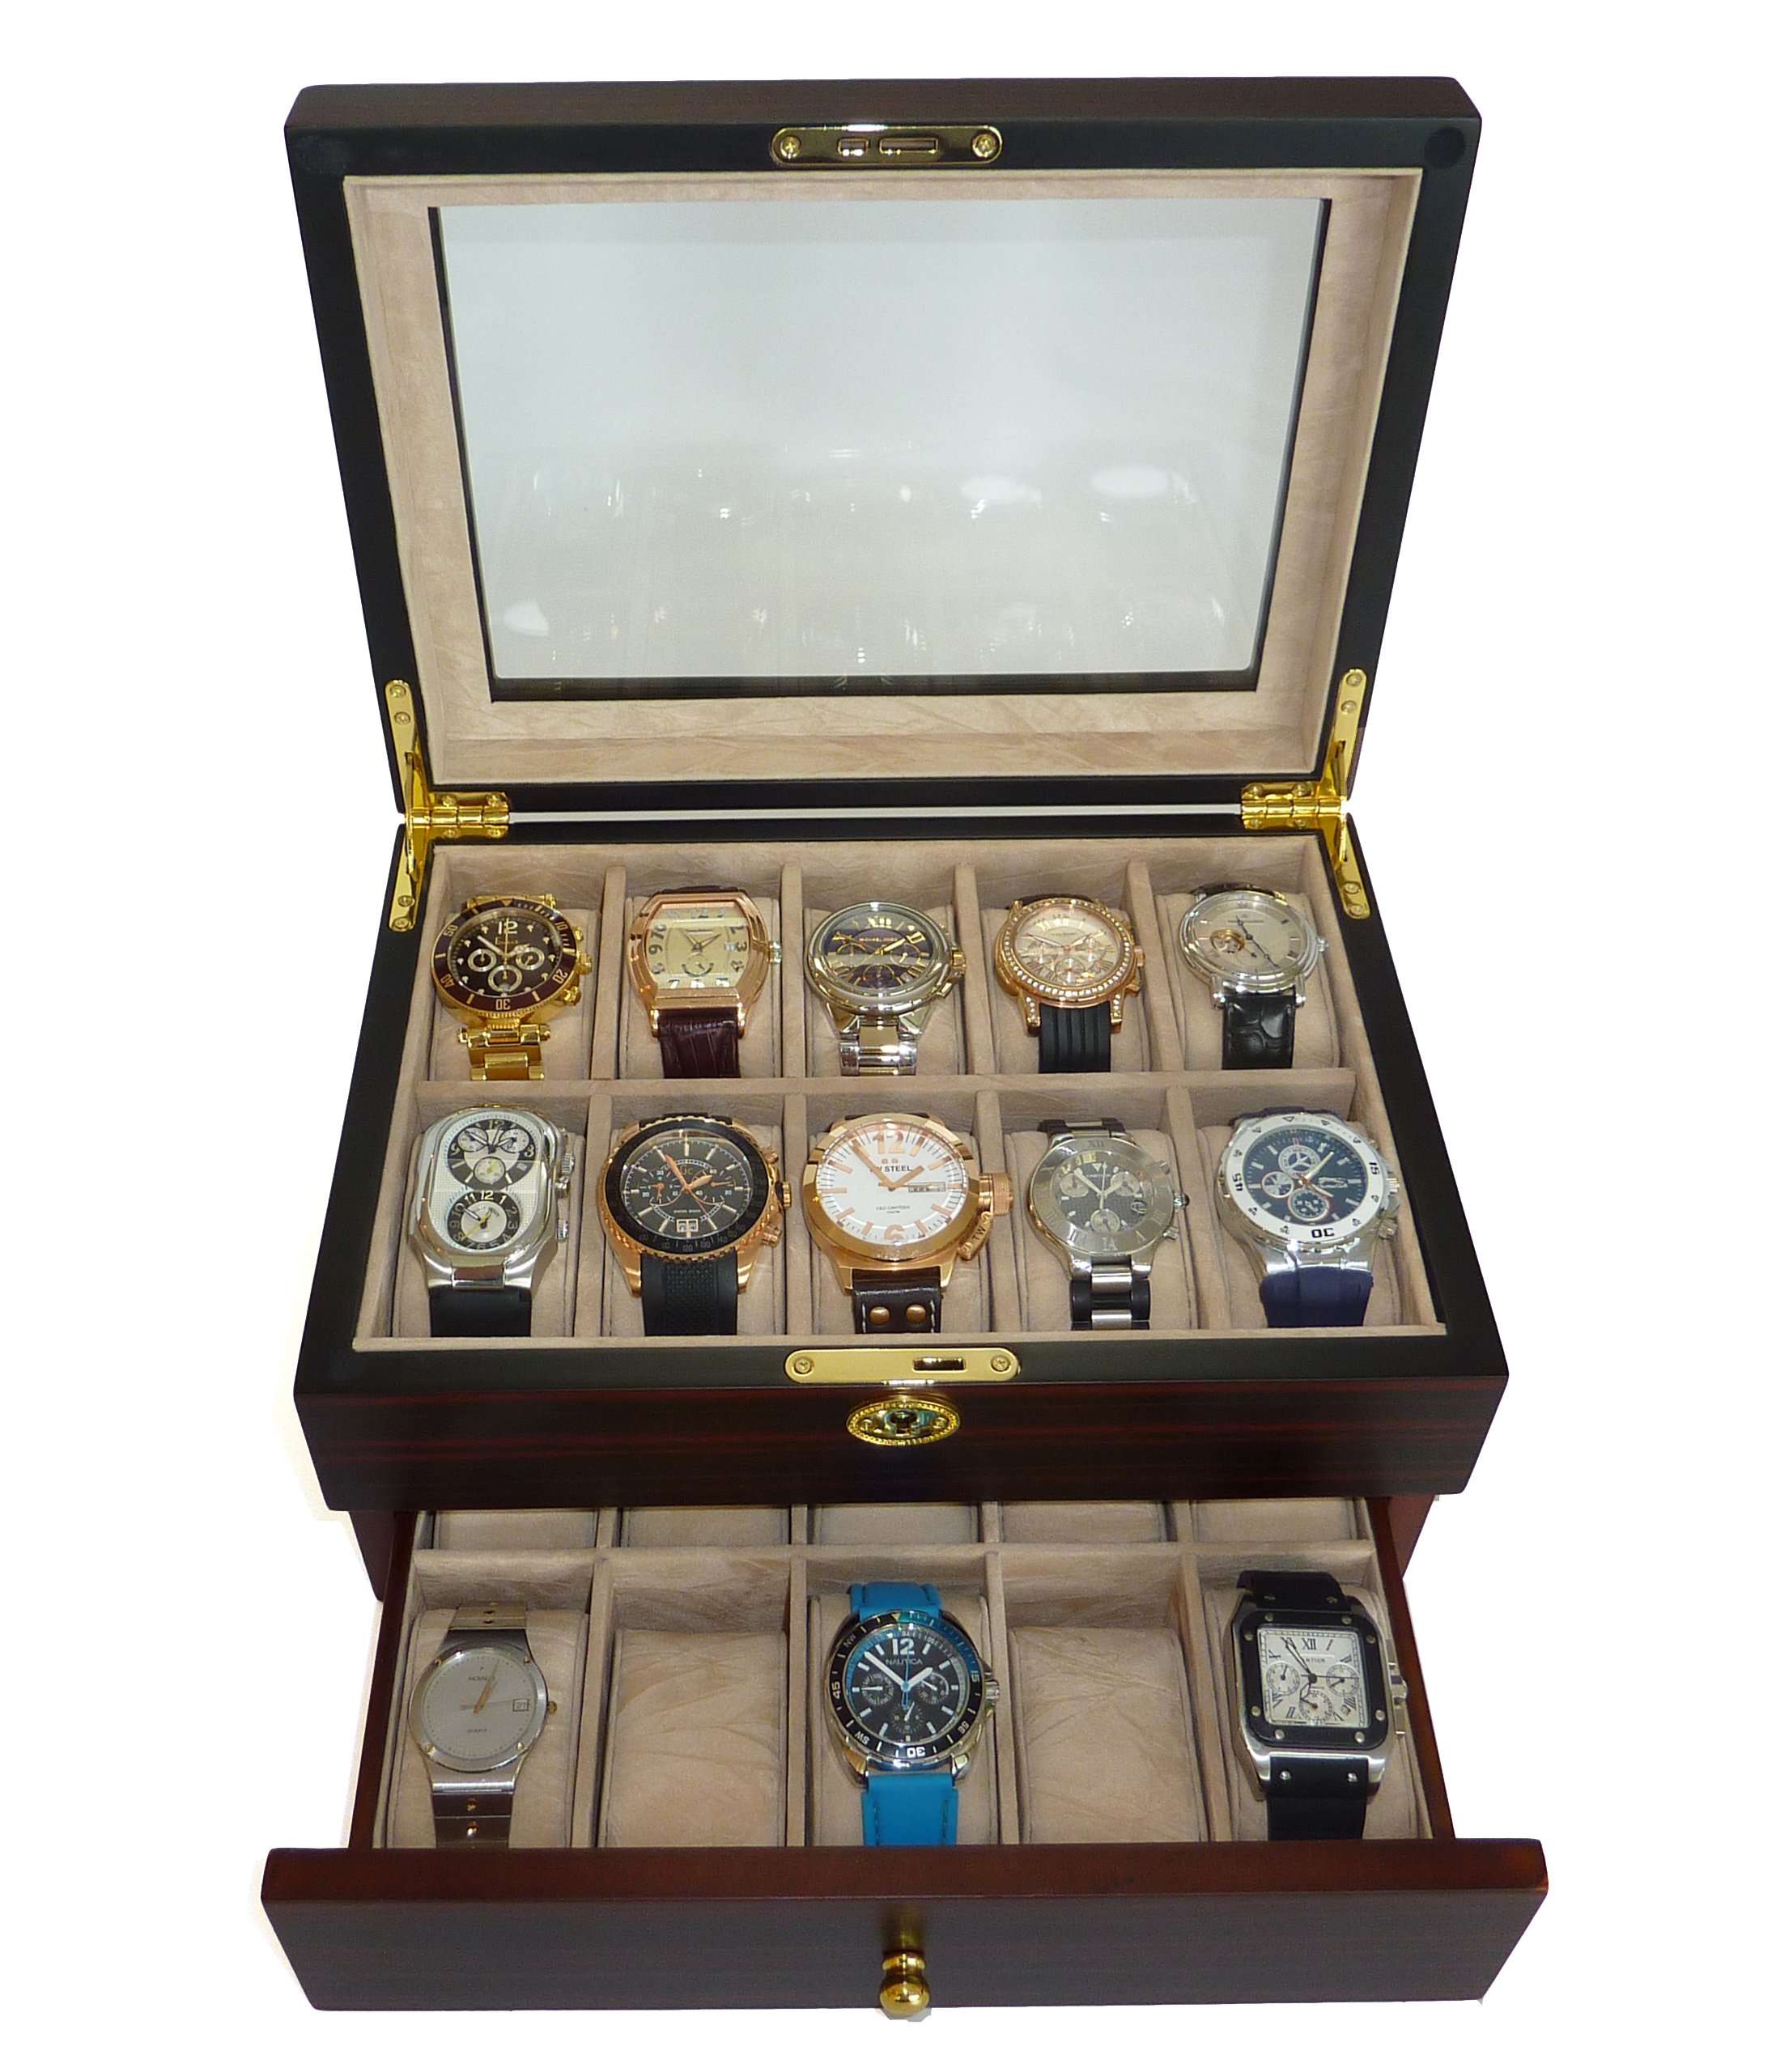 TimelyBuys 20 Piece Ebony Walnut Wood Men's Watch Box Display Case Collection Jewelry Box Storage Glass Top Father's Day Gift